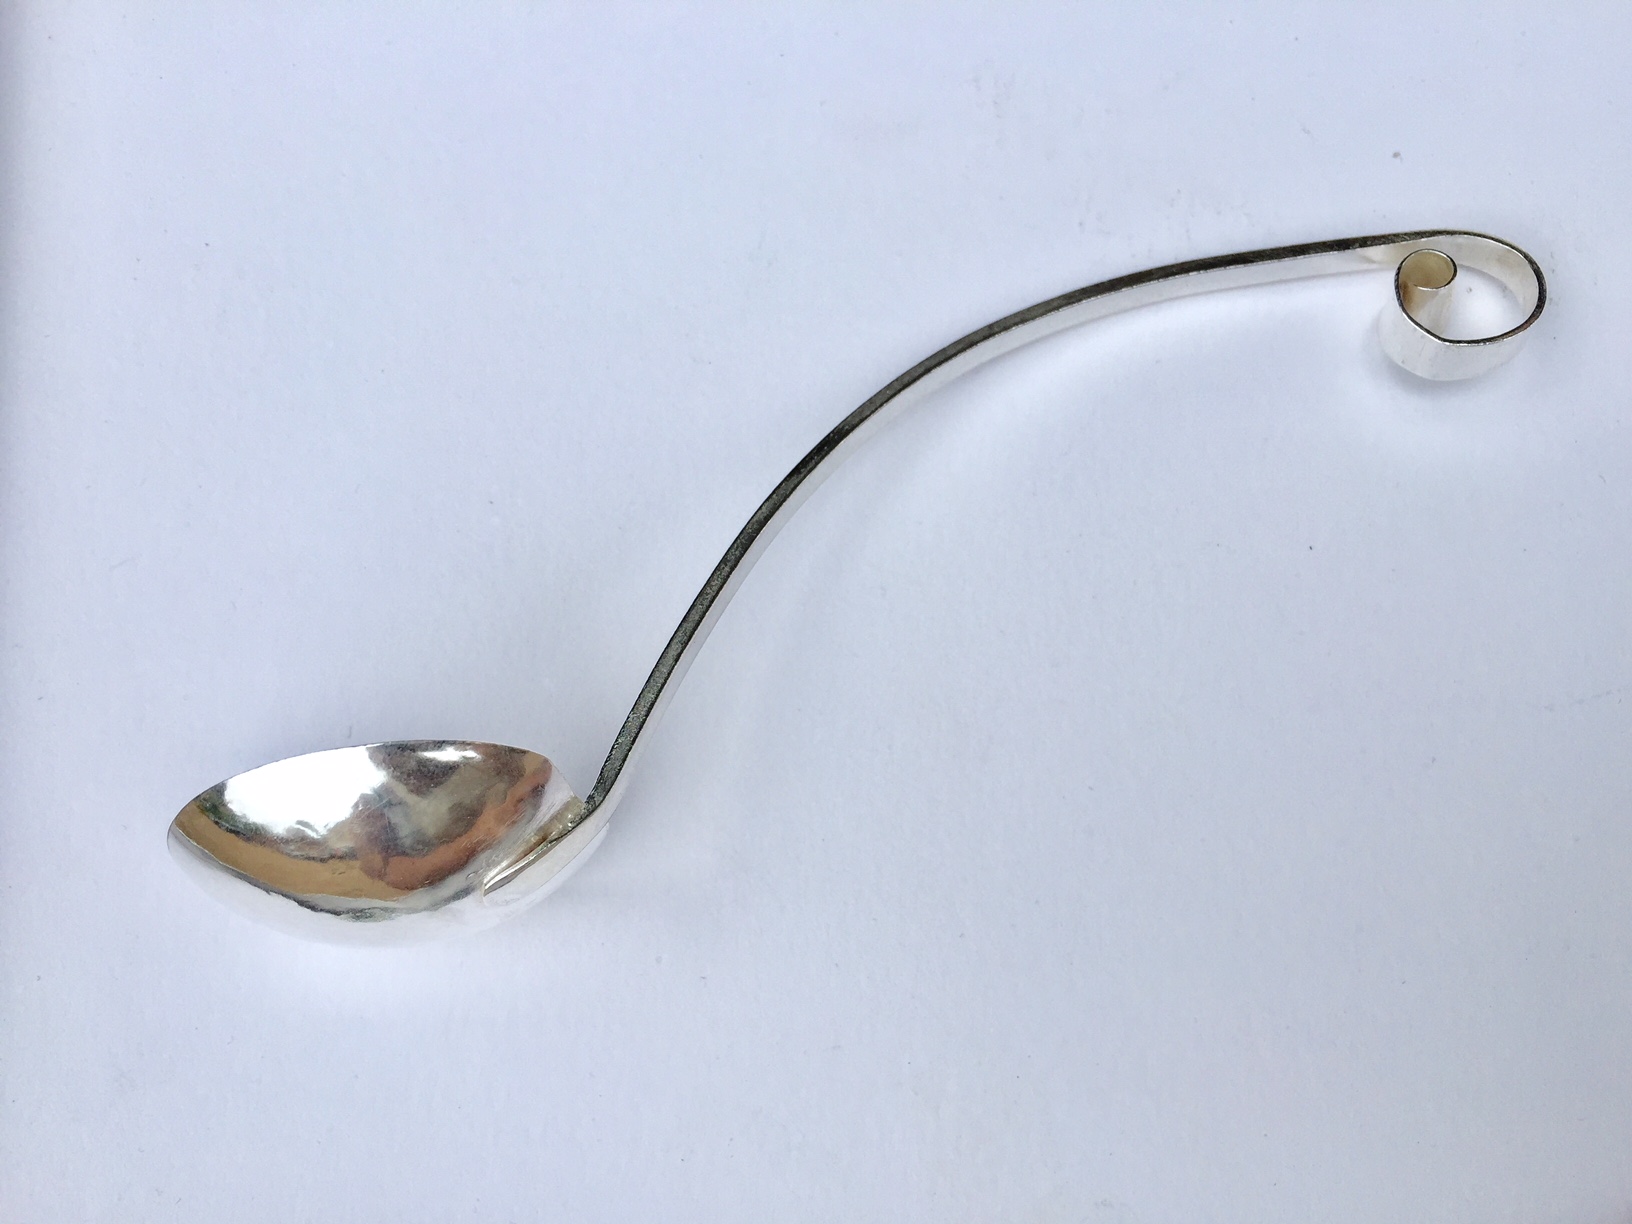 spoon-making-4.jpeg